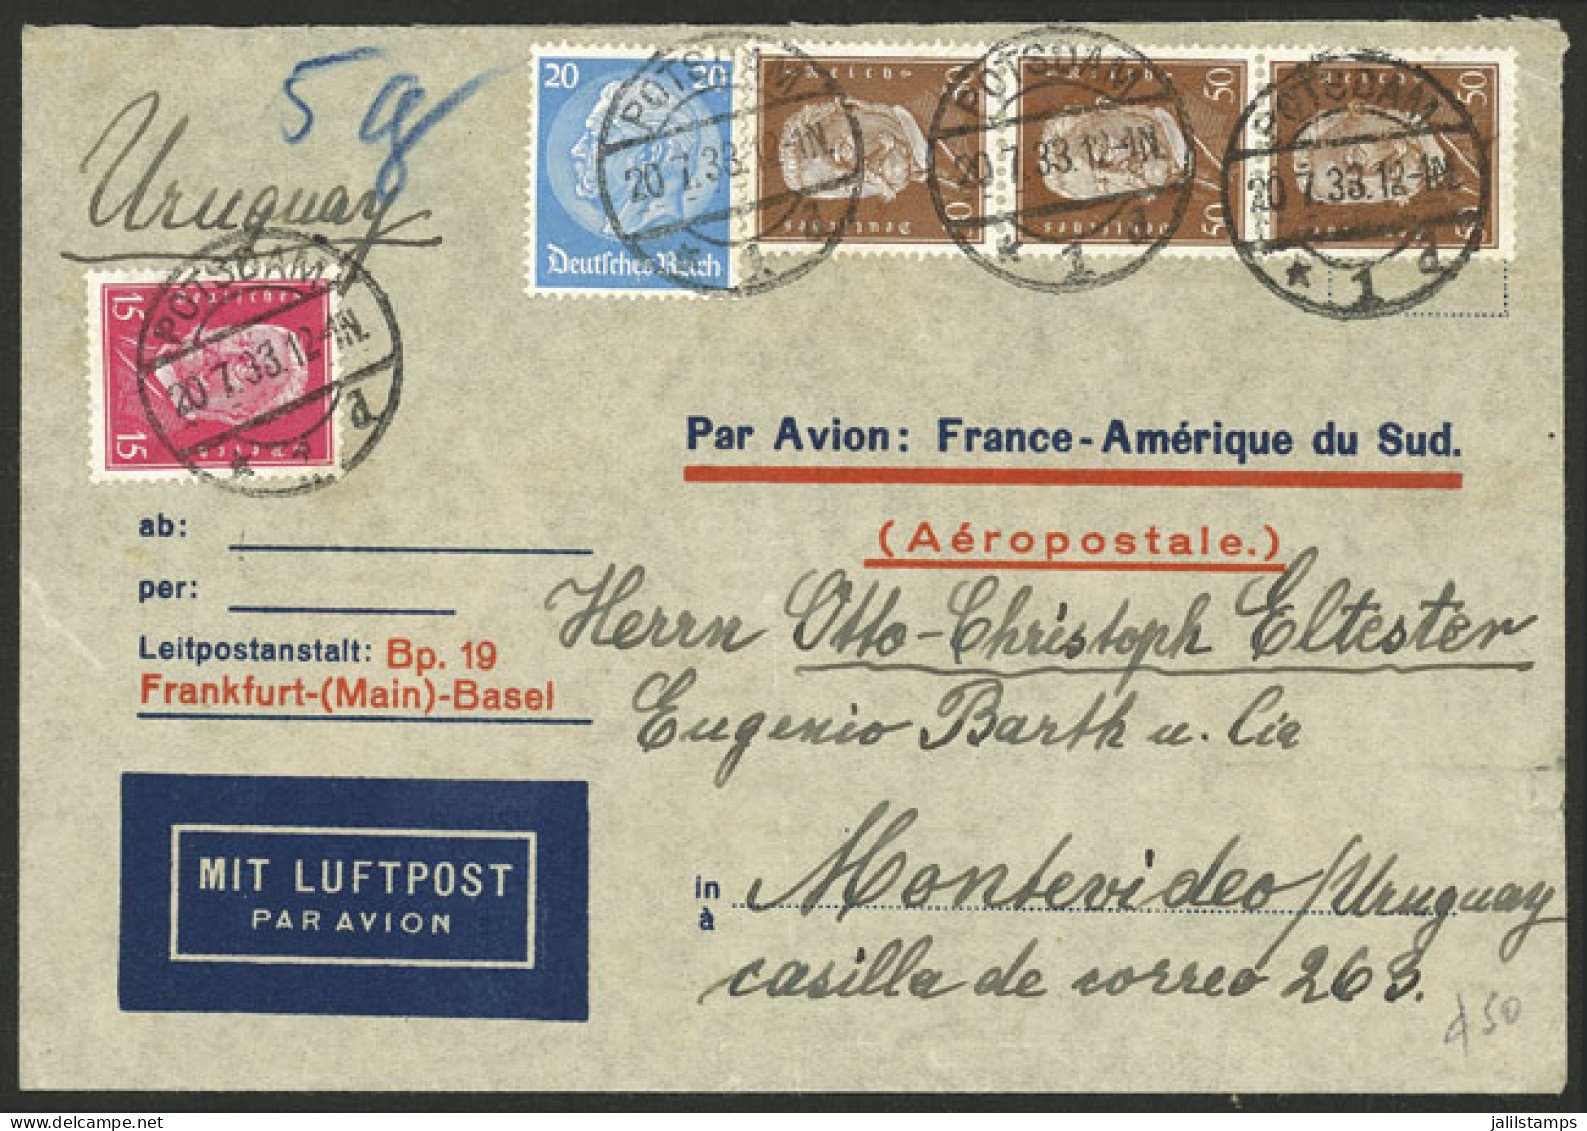 GERMANY: 20/JUL/1933 Postdam - Uruguay, Airmail Cover Sent By Air France Con Franqueo De 1,85Mk., Al Dorso Tiene Tránsit - Storia Postale